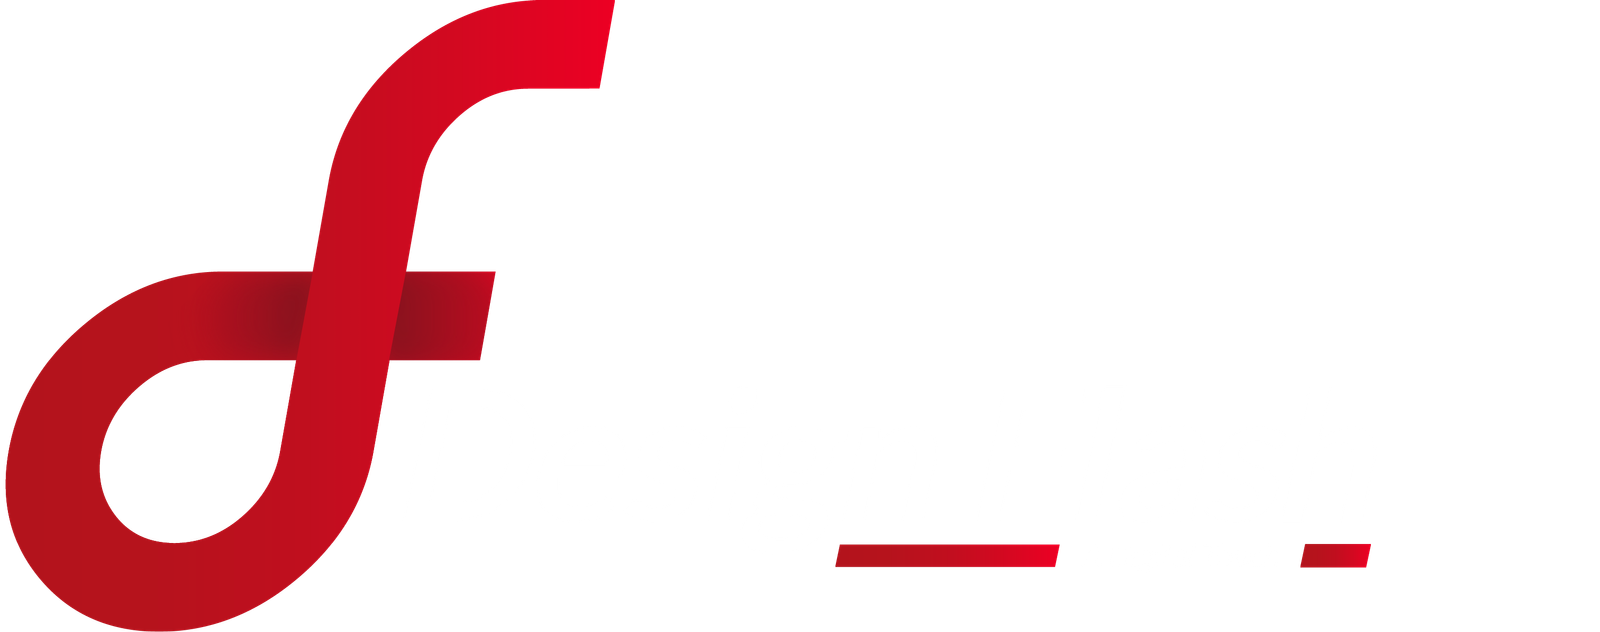 Infinity logo representing design flare a website design agency